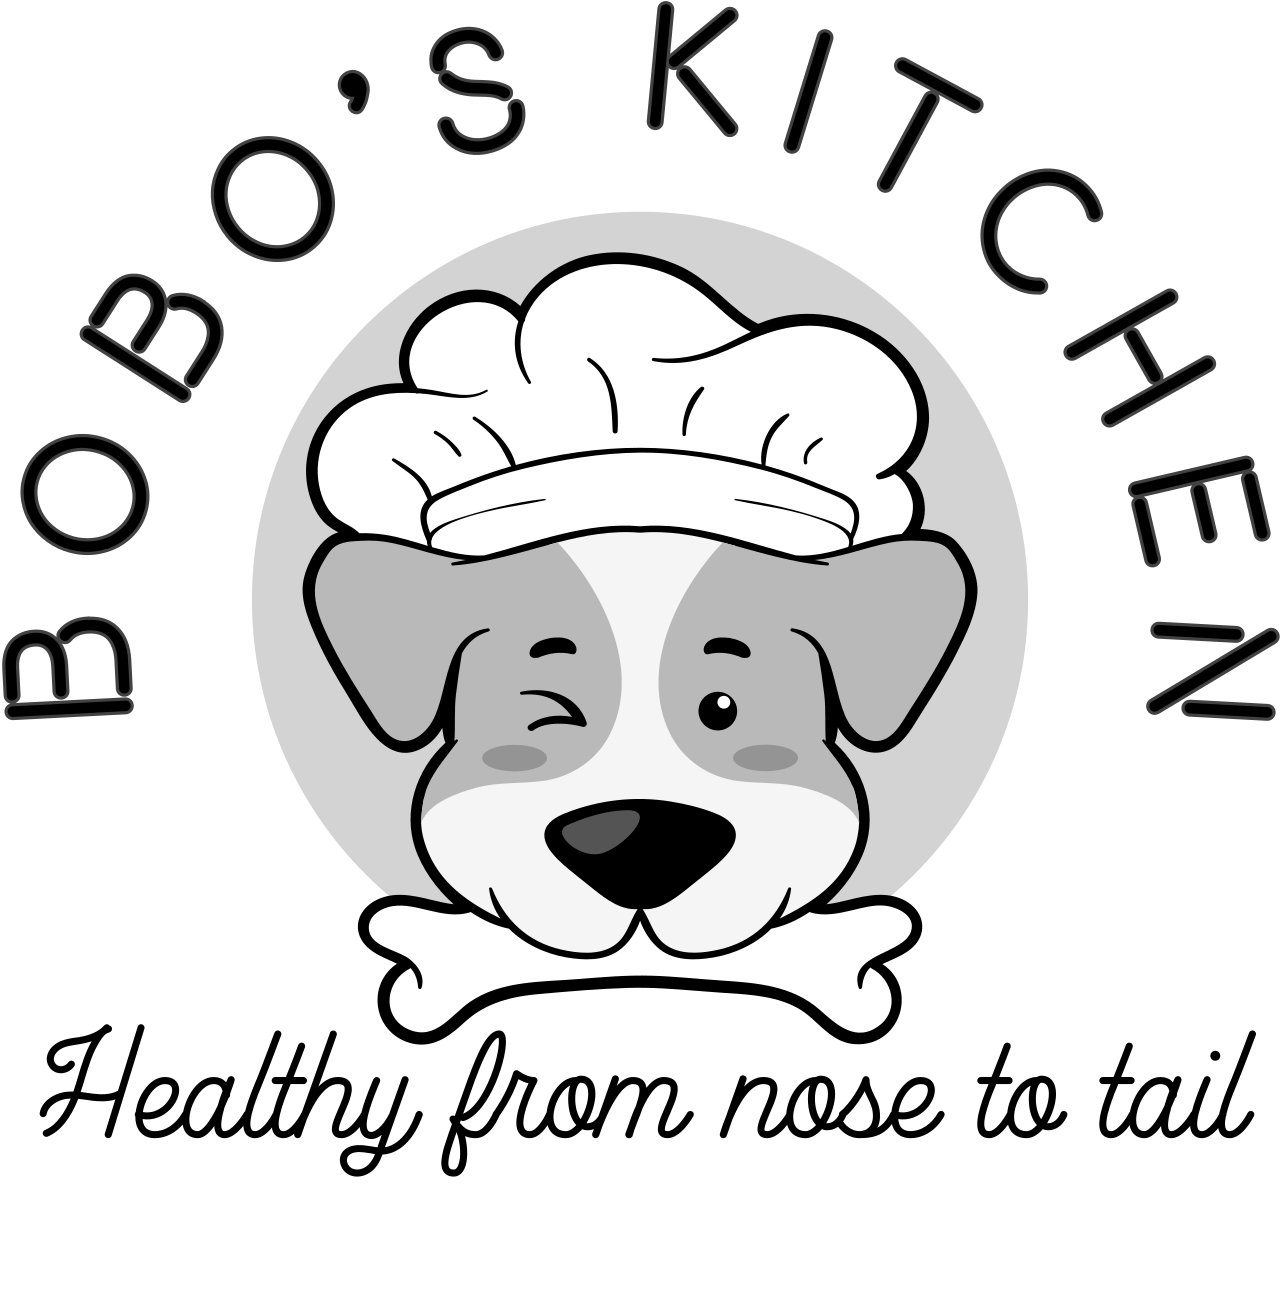 Bobo's kitchen's web page